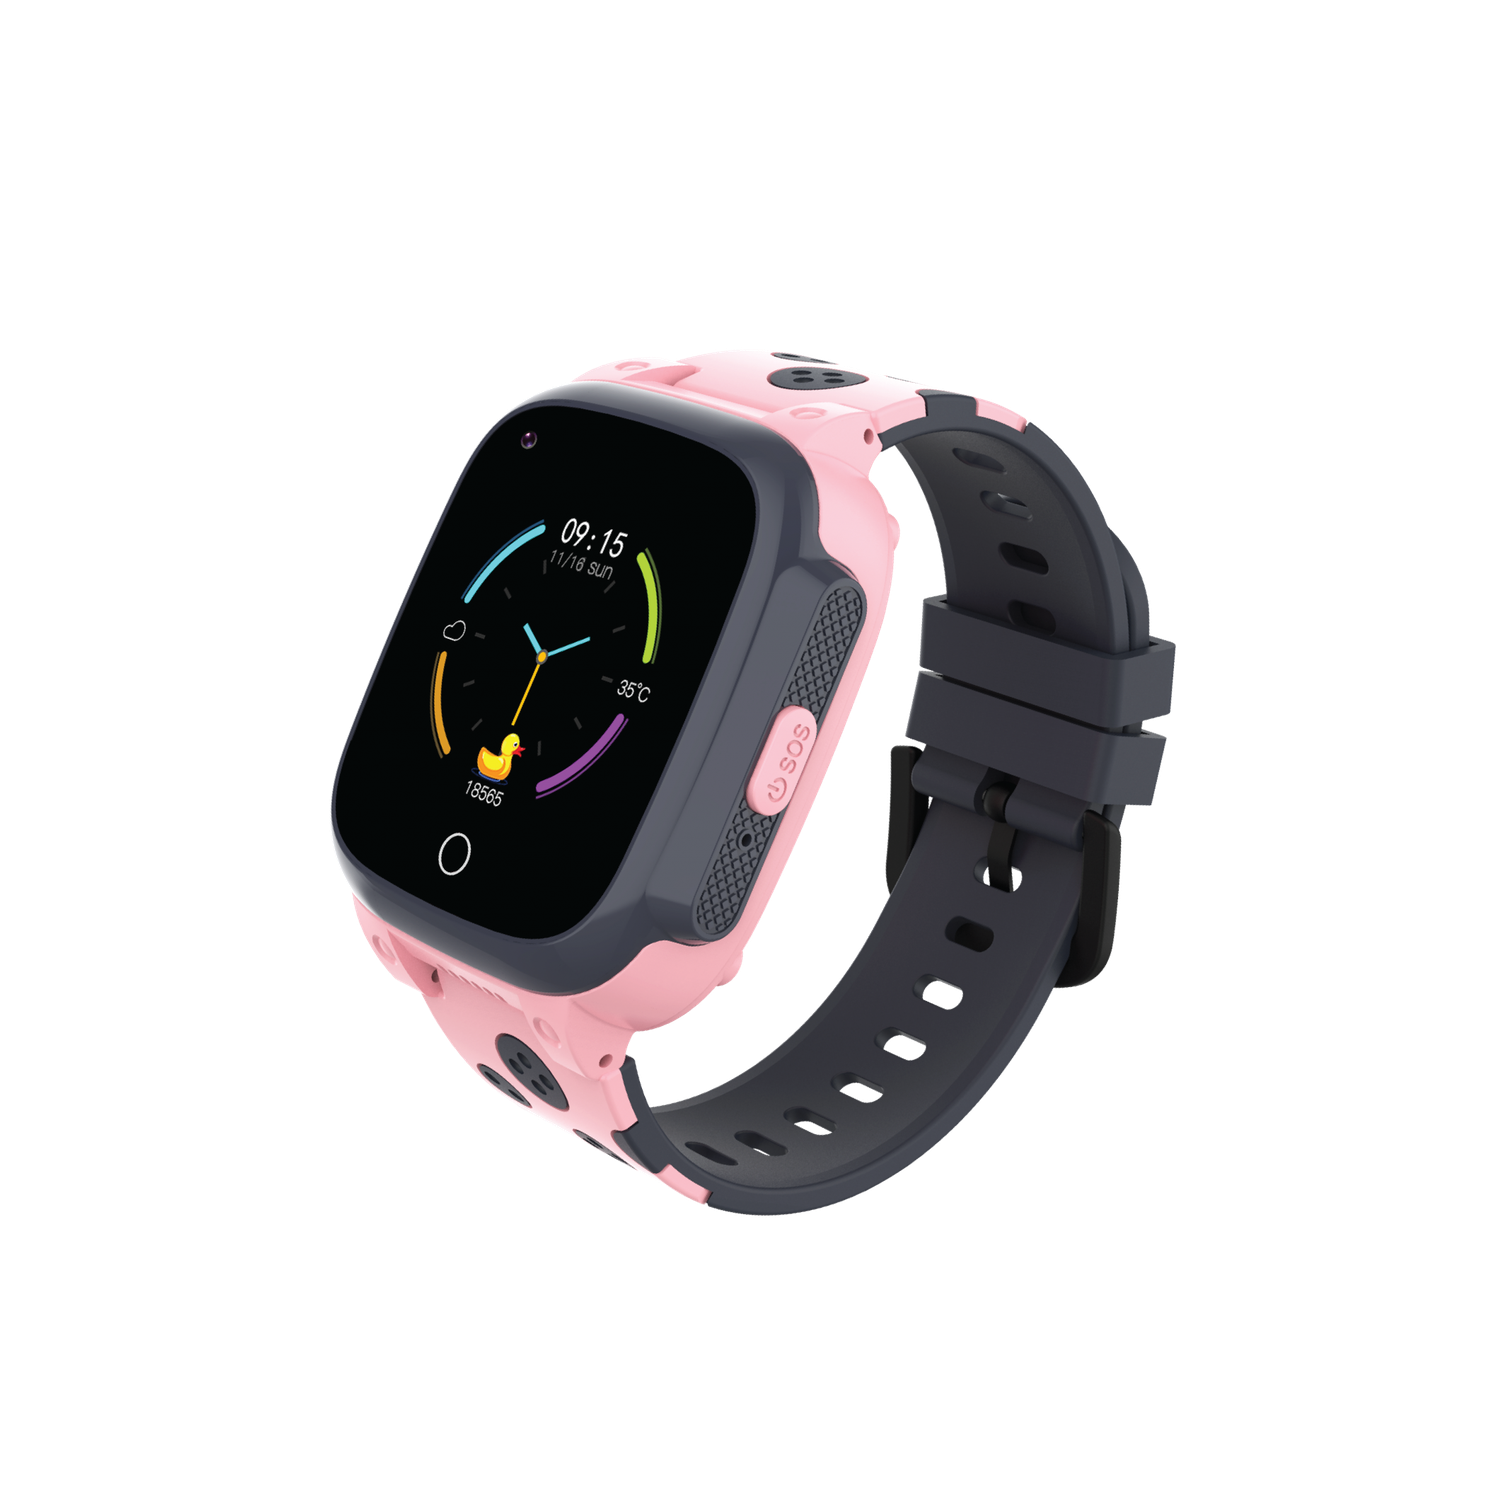 Bluetooth smart watch Intelligent Wristwatch Support Phone Camera SIM -  coolelectronicstore.com